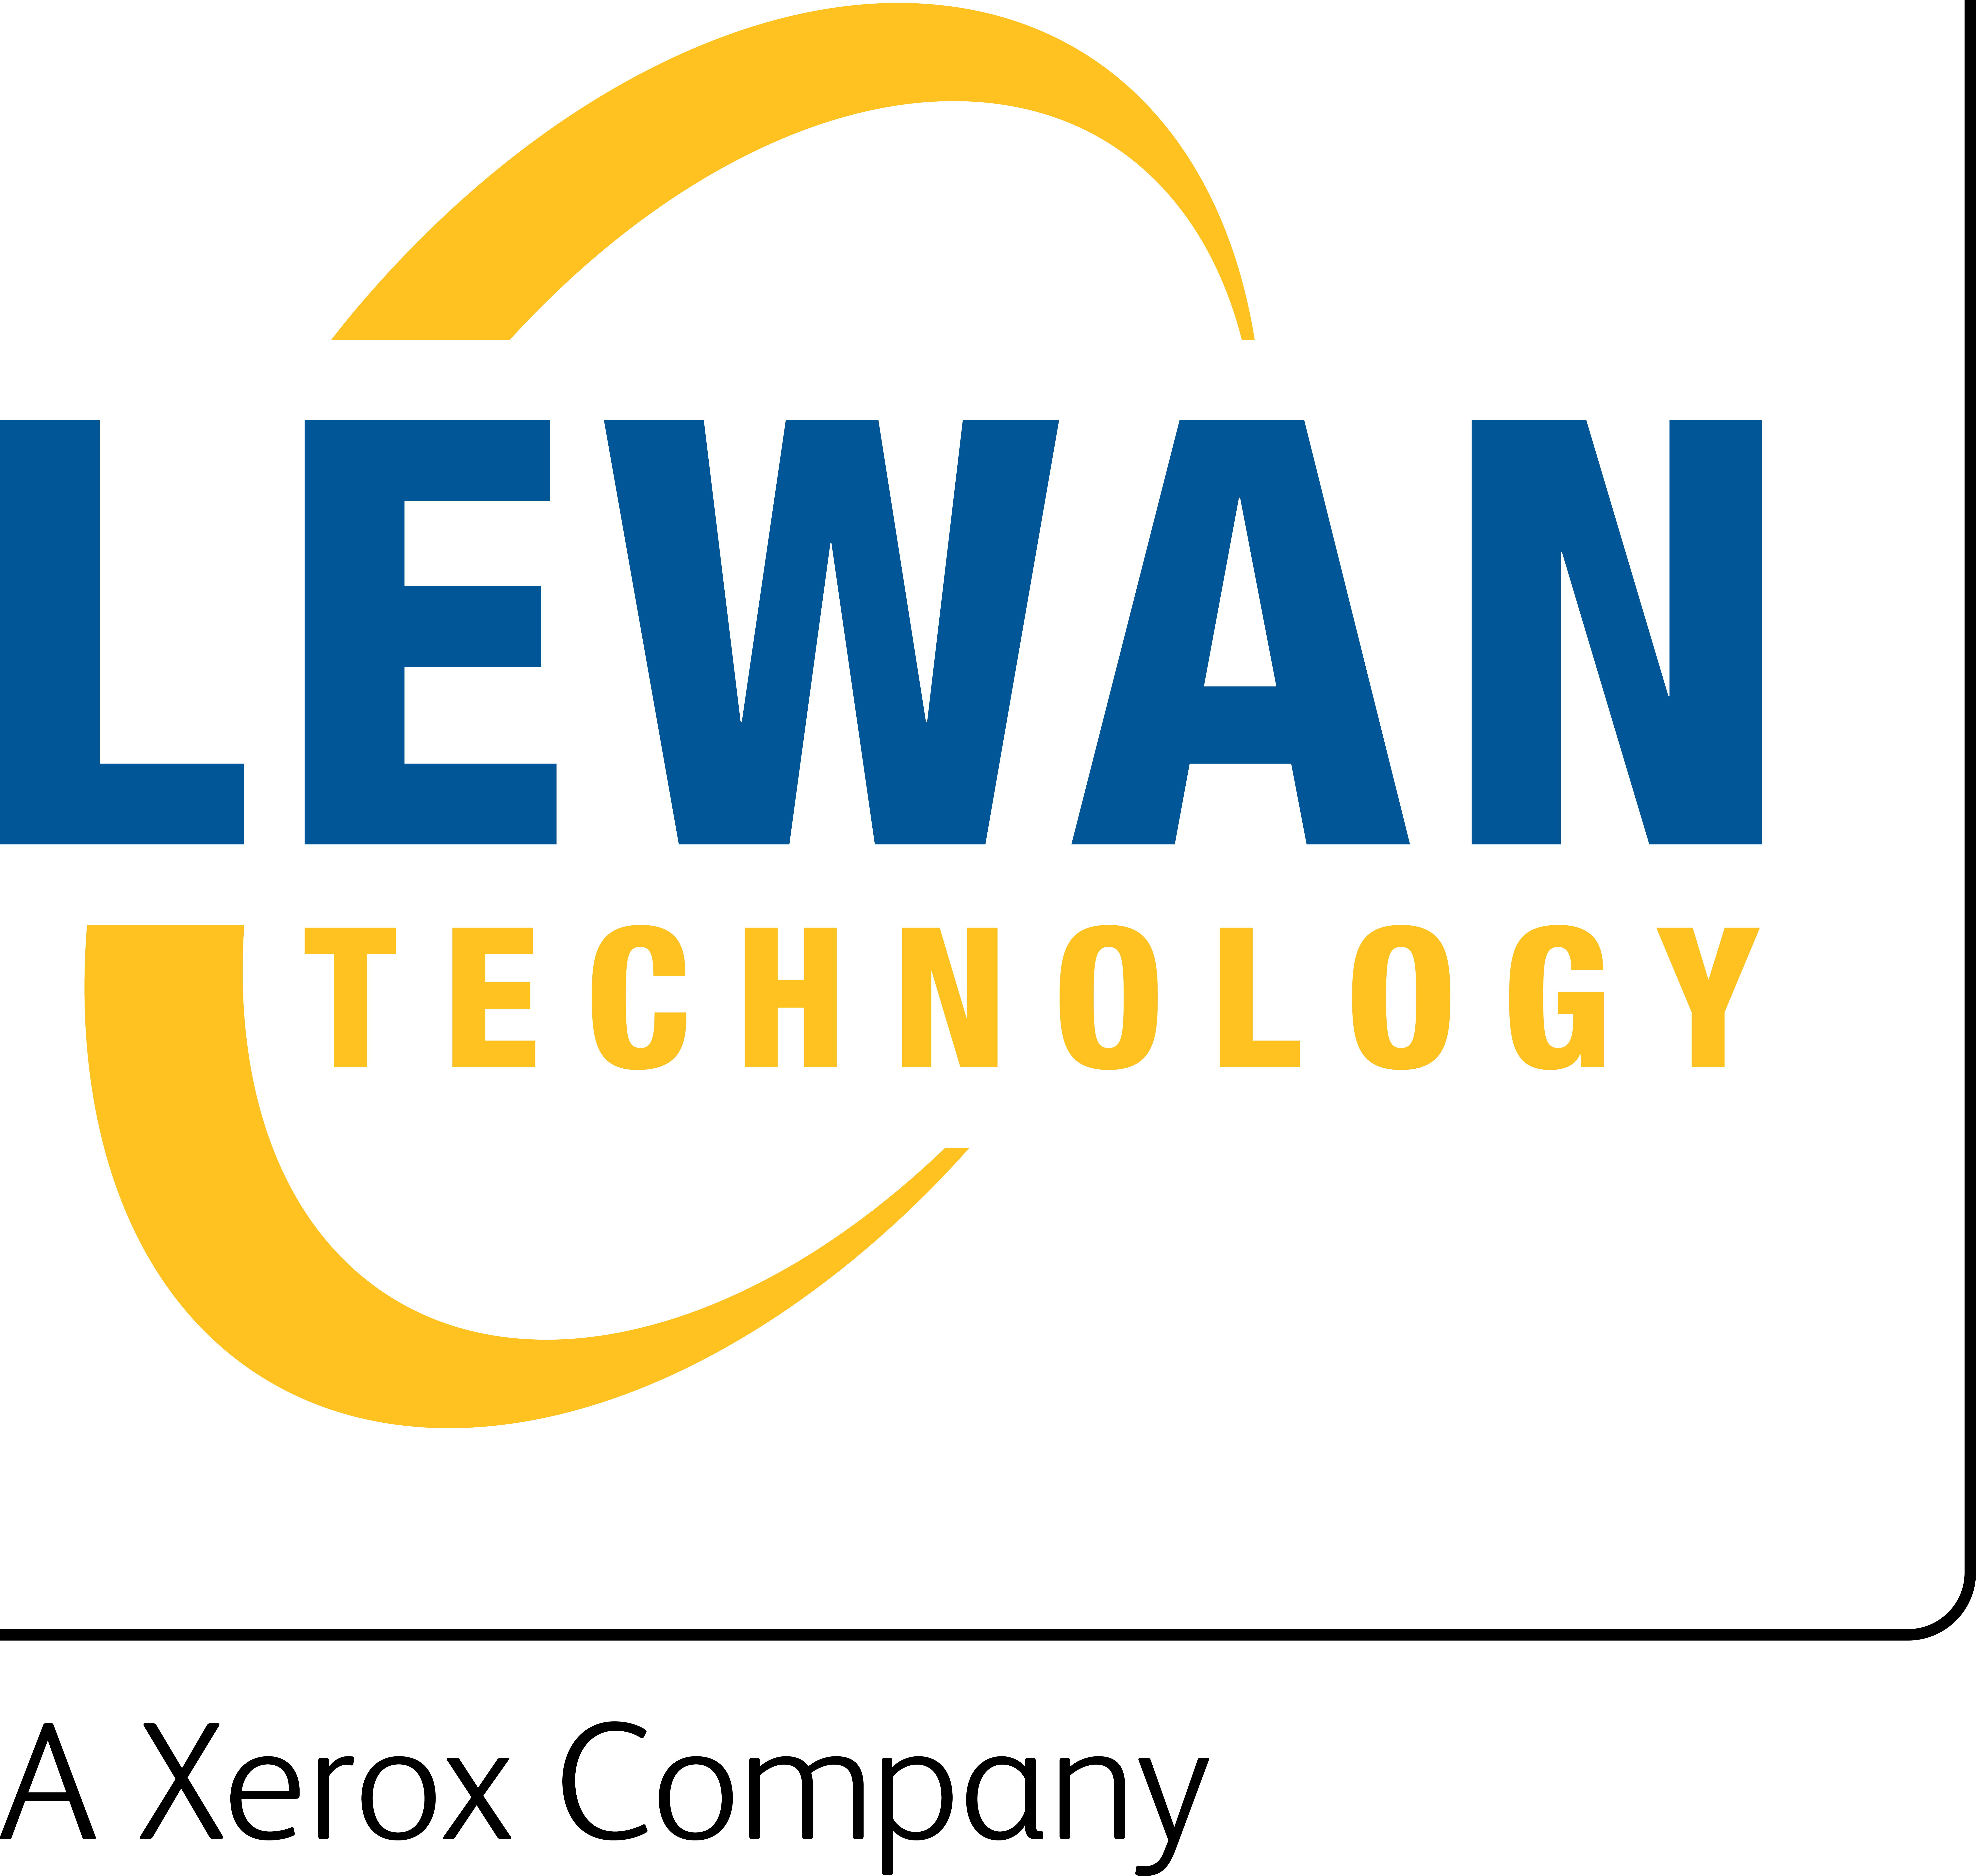 Lewan Technology logo